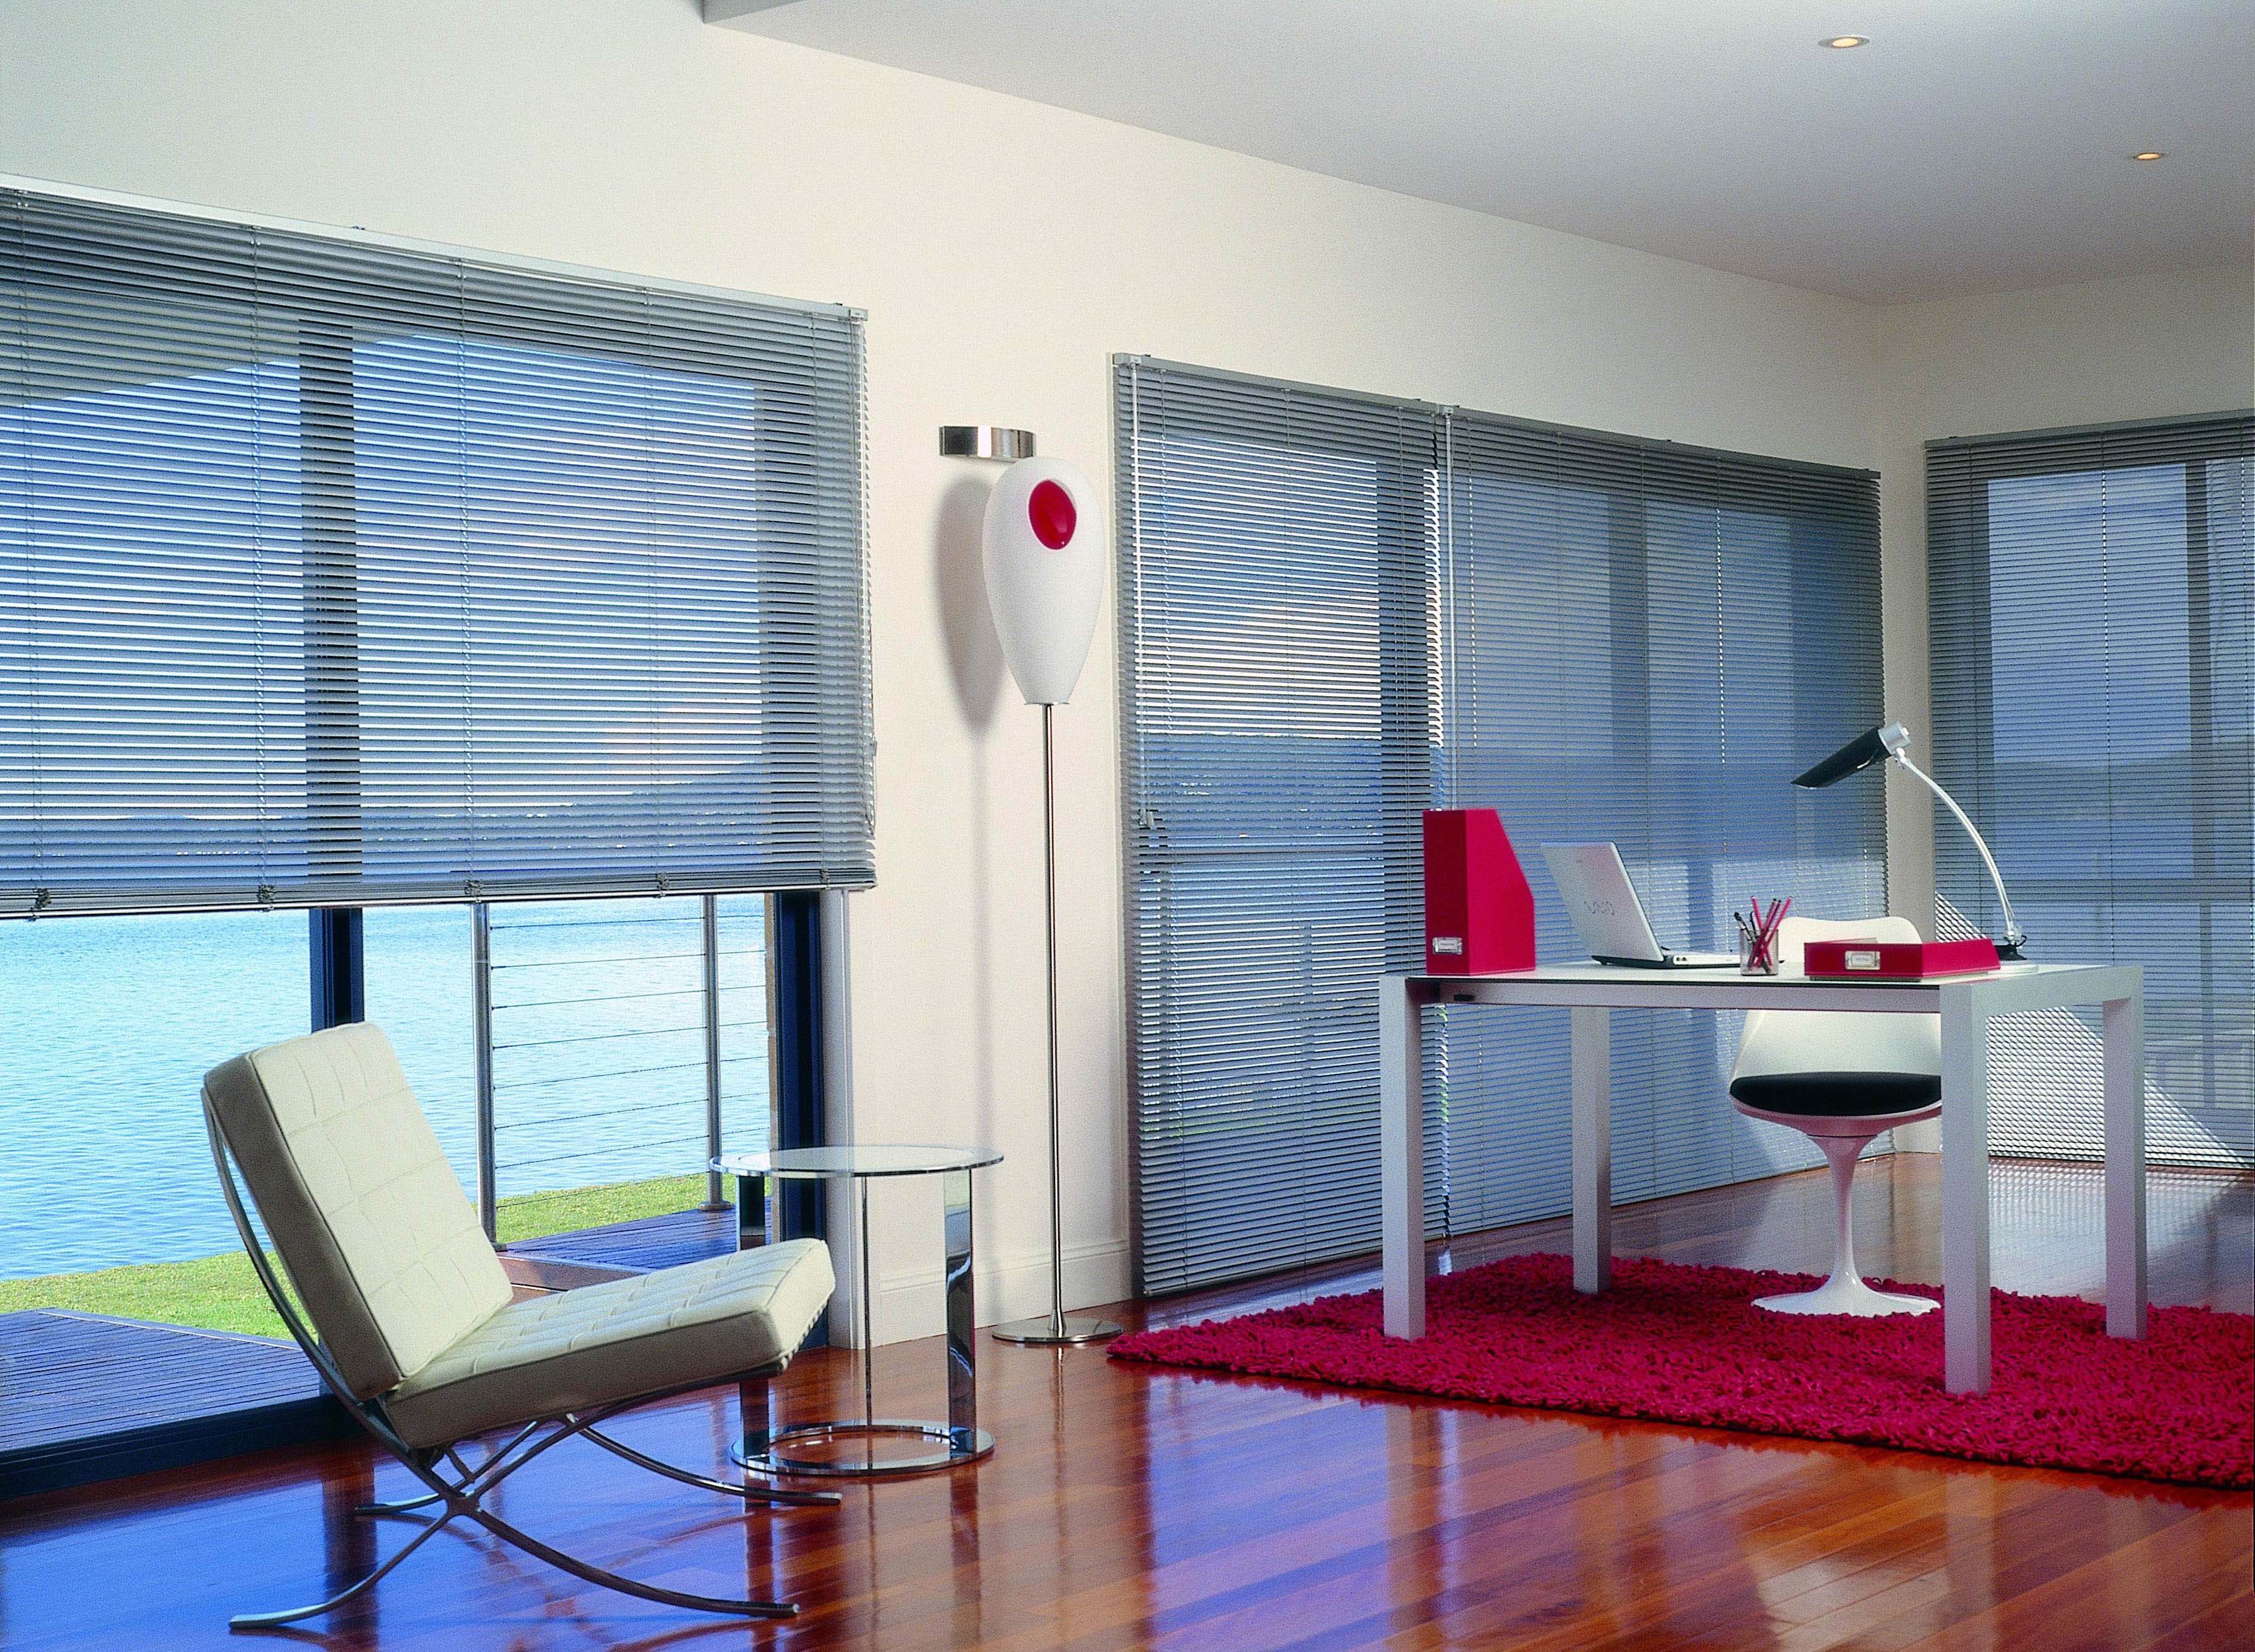 Luxaflex Aluminium Venetian Blinds office with red decor